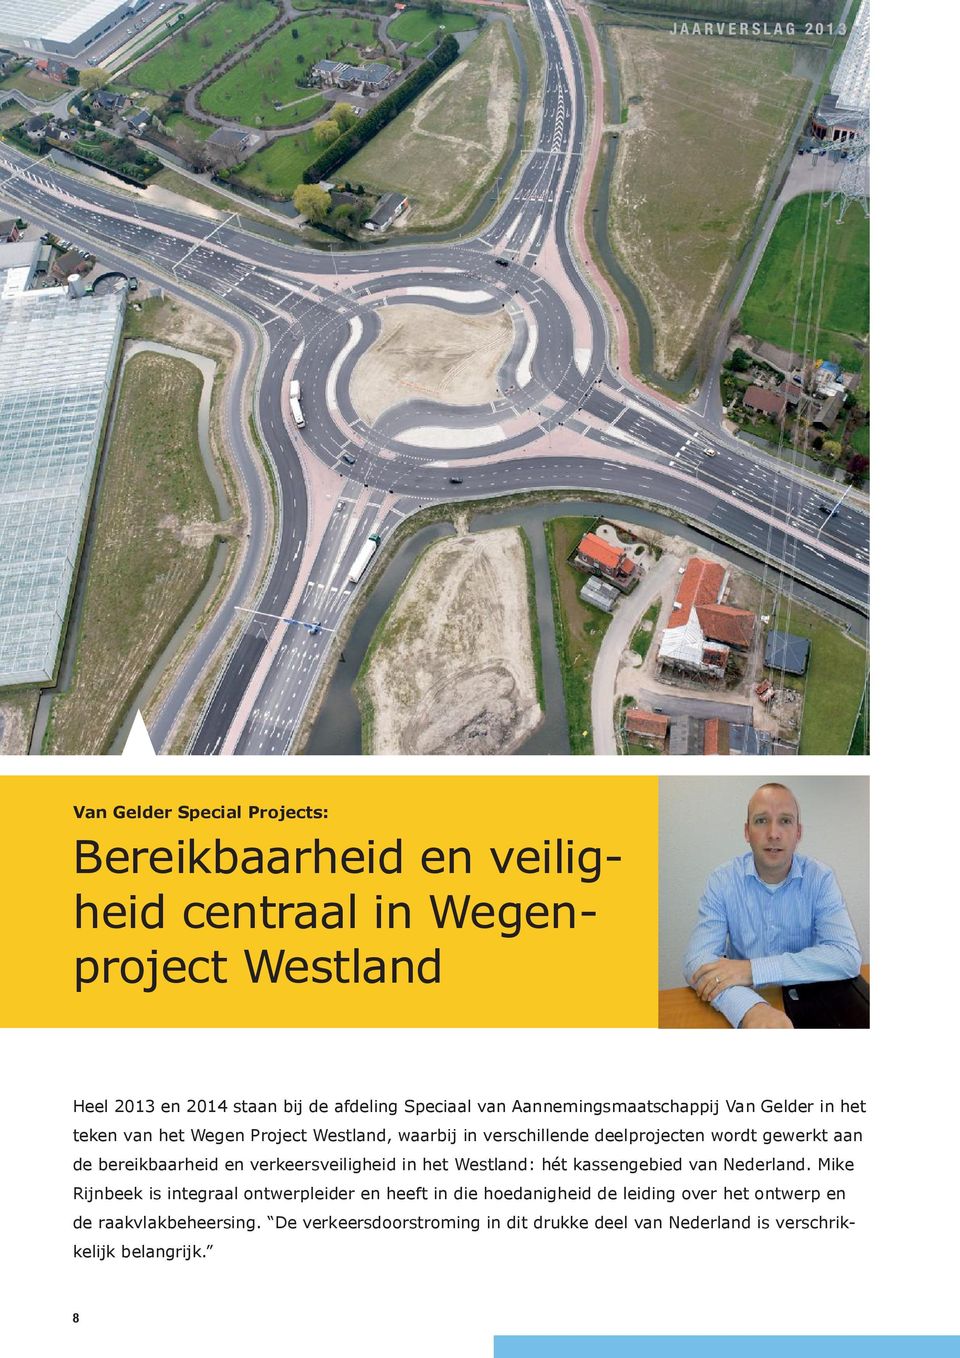 aan de bereikbaarheid en verkeersveiligheid in het Westland: hét kassengebied van Nederland.